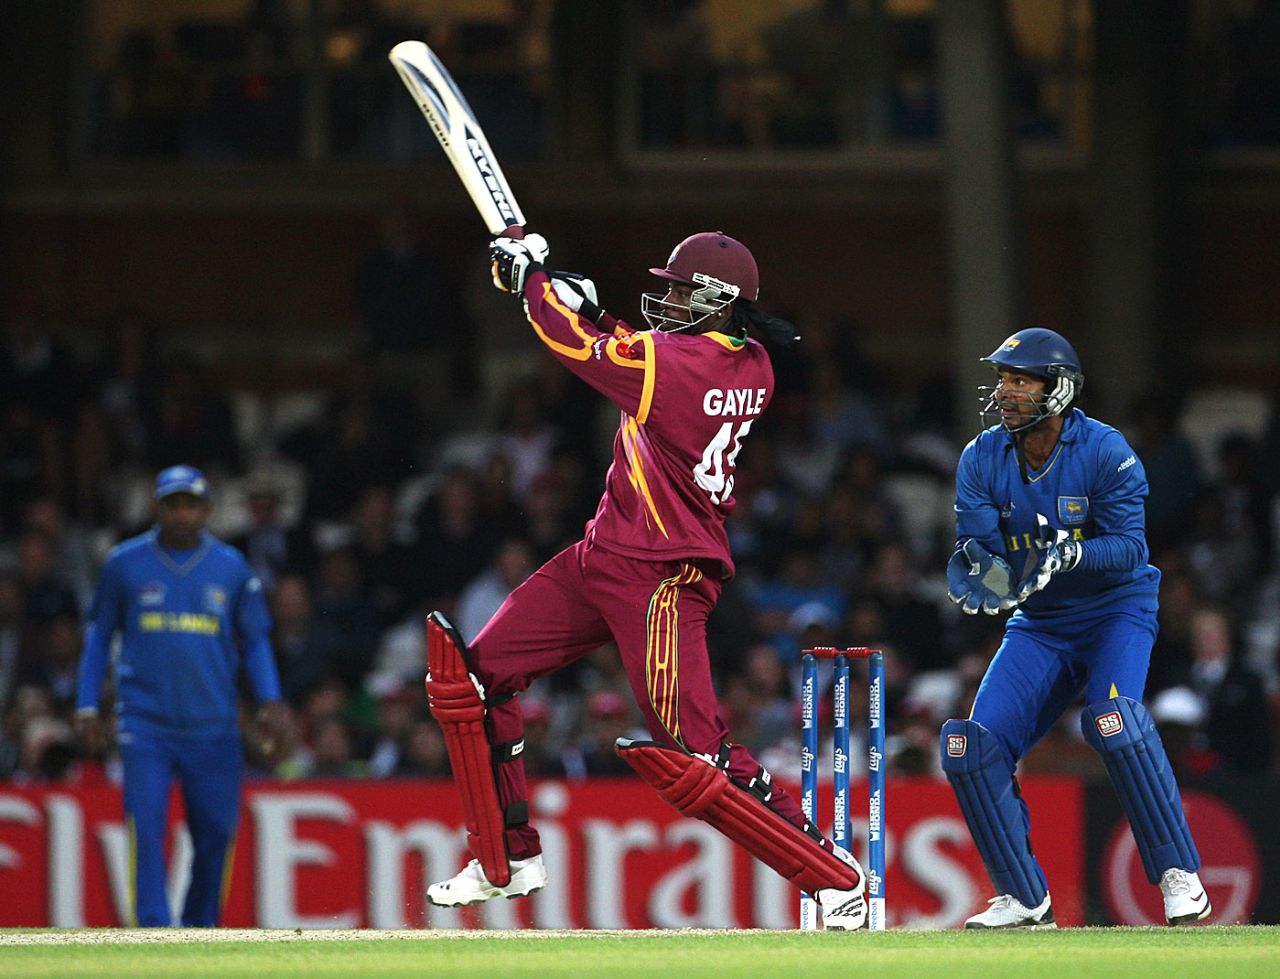 Chris Gayle pulls, Sri Lanka v West Indies, ICC World Twenty20, 2nd semi-final, The Oval, June 19, 2009 